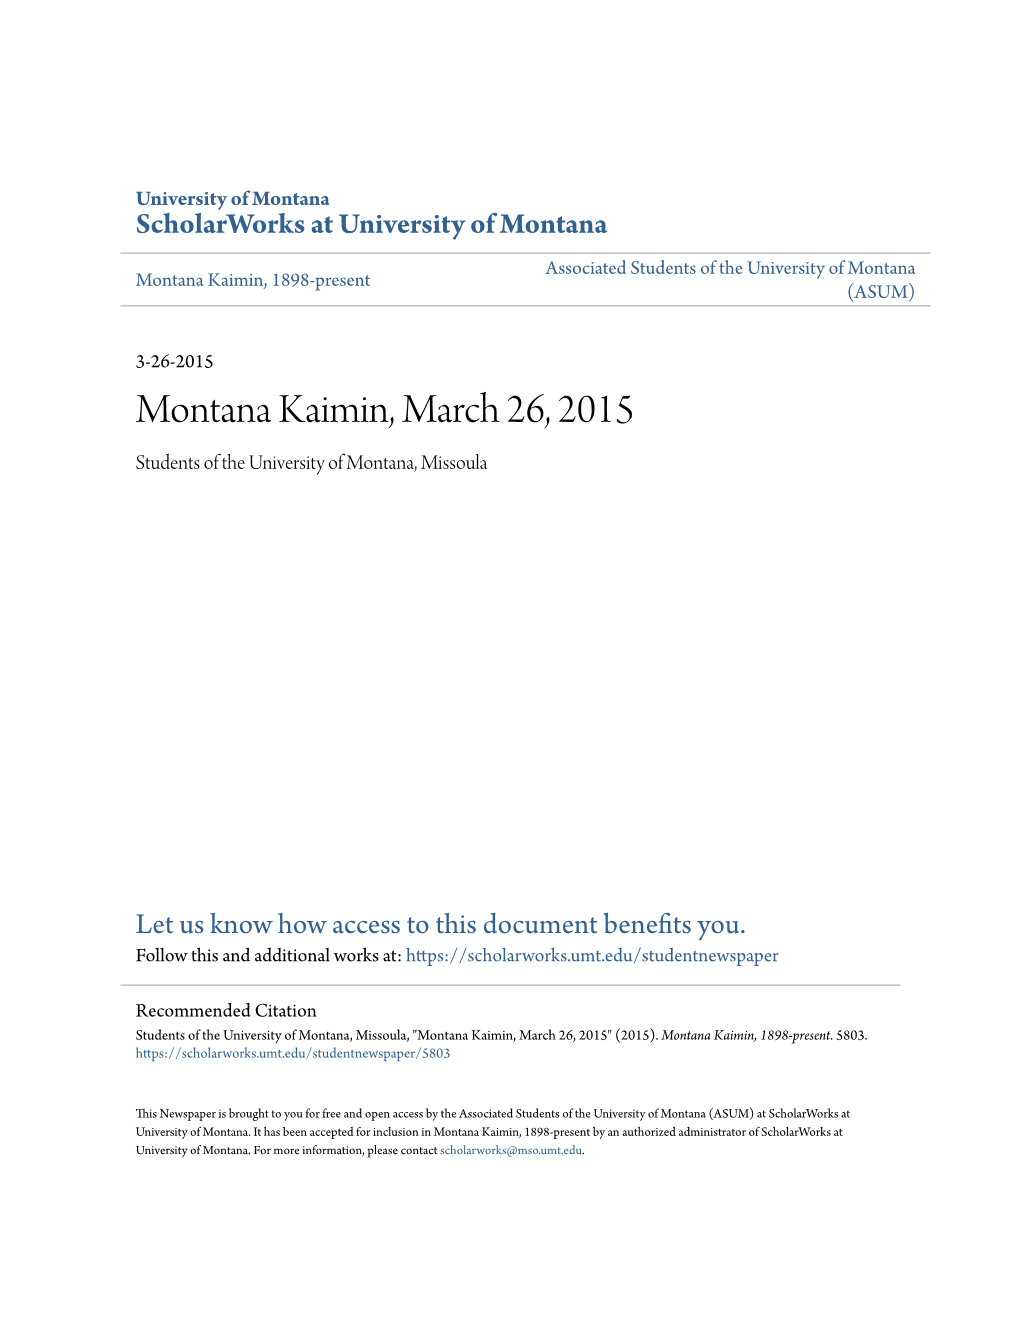 Montana Kaimin, March 26, 2015 Students of the University of Montana, Missoula